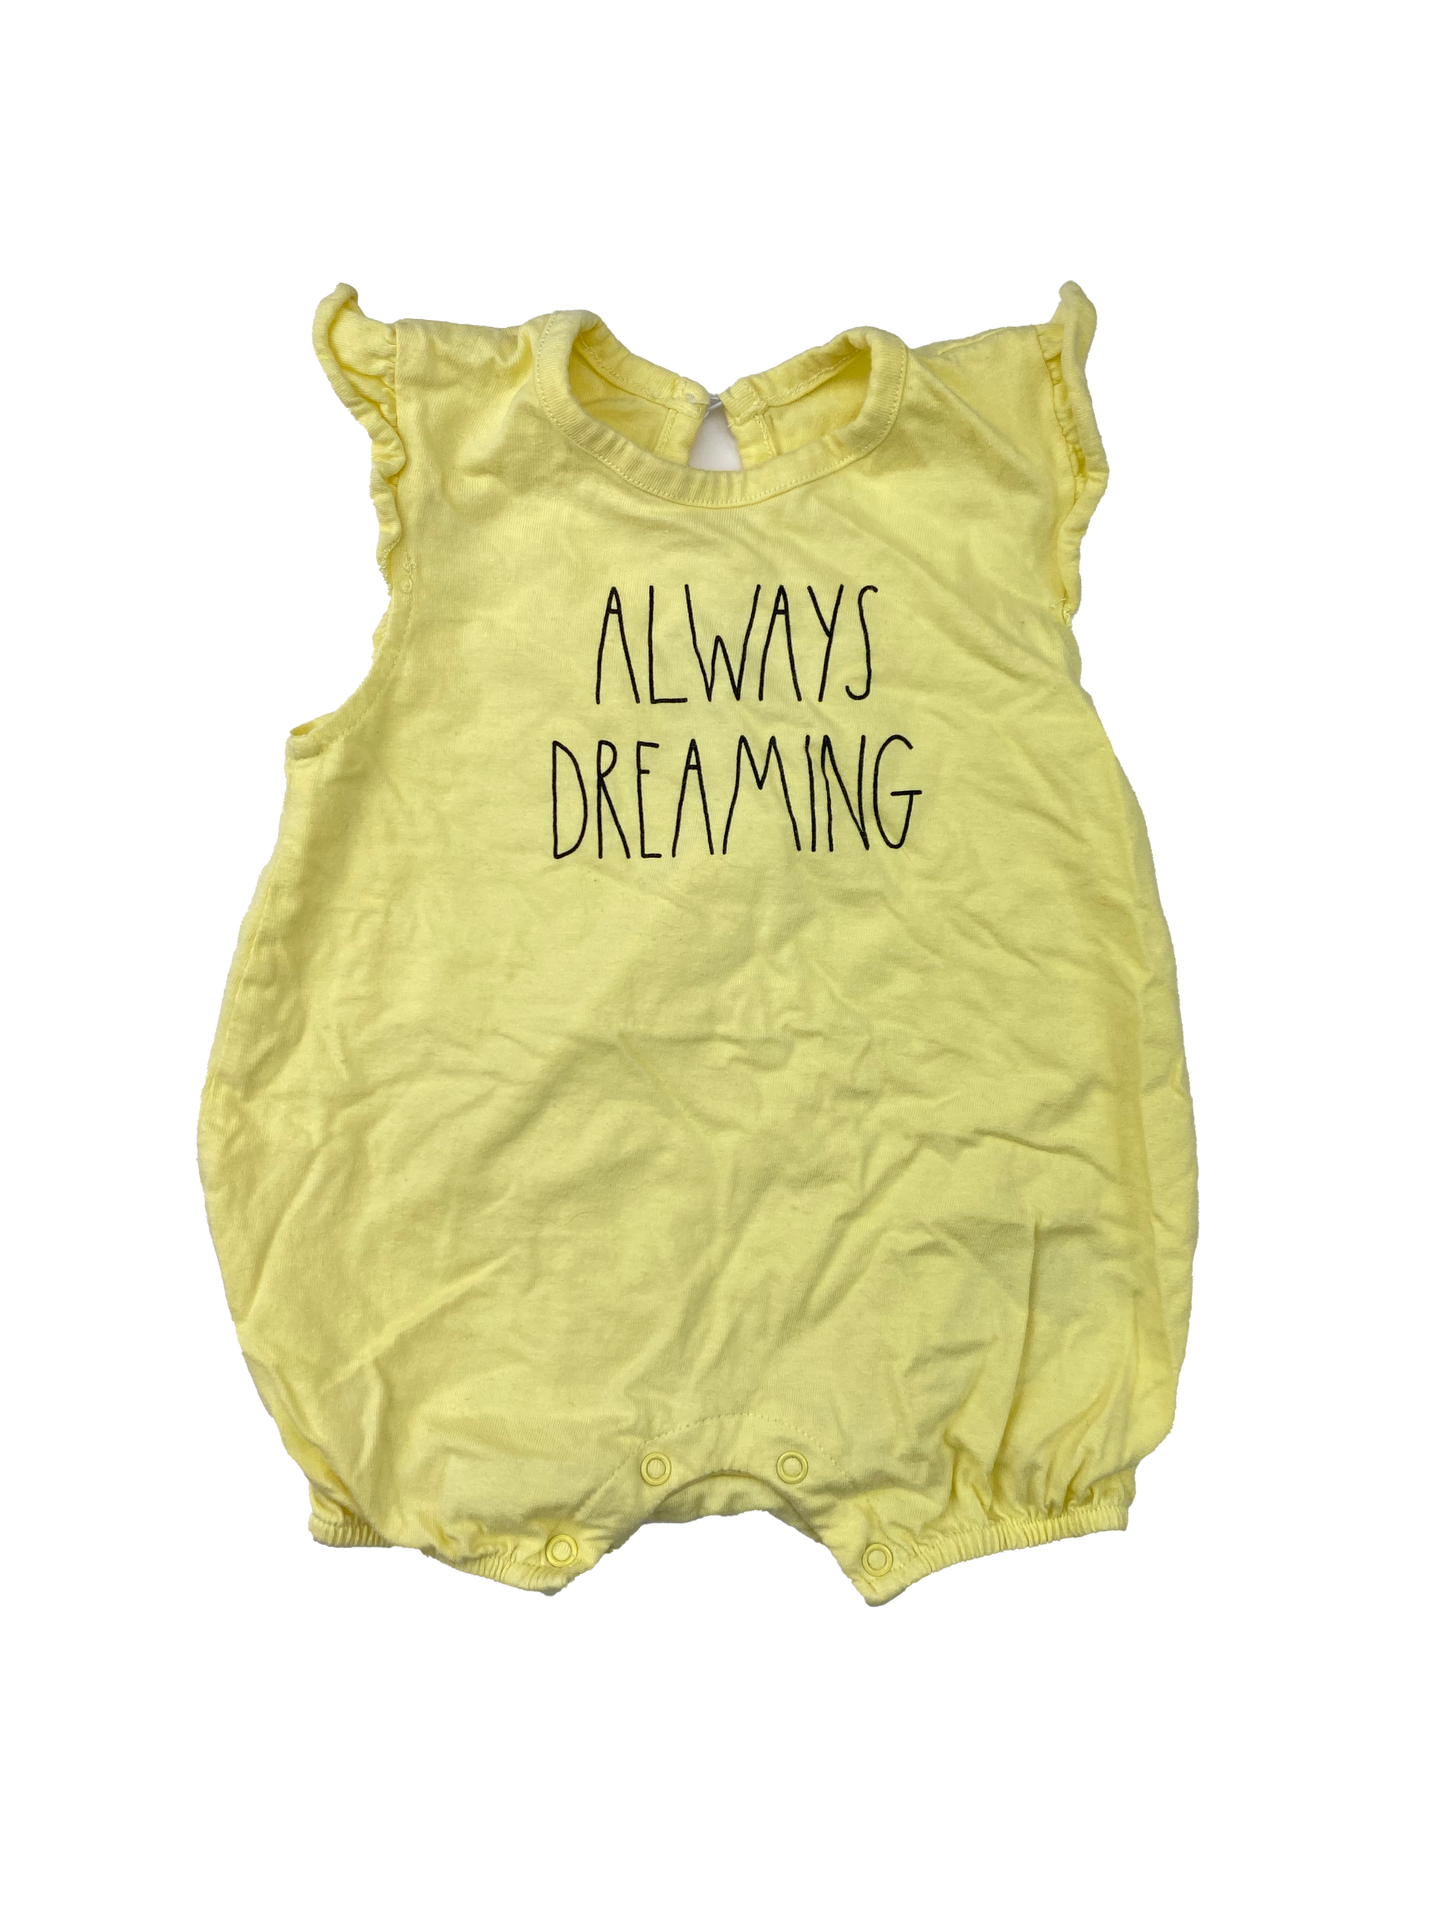 Rae Dunn Baby Yellow Romper "Always Dreaming" 6-9M